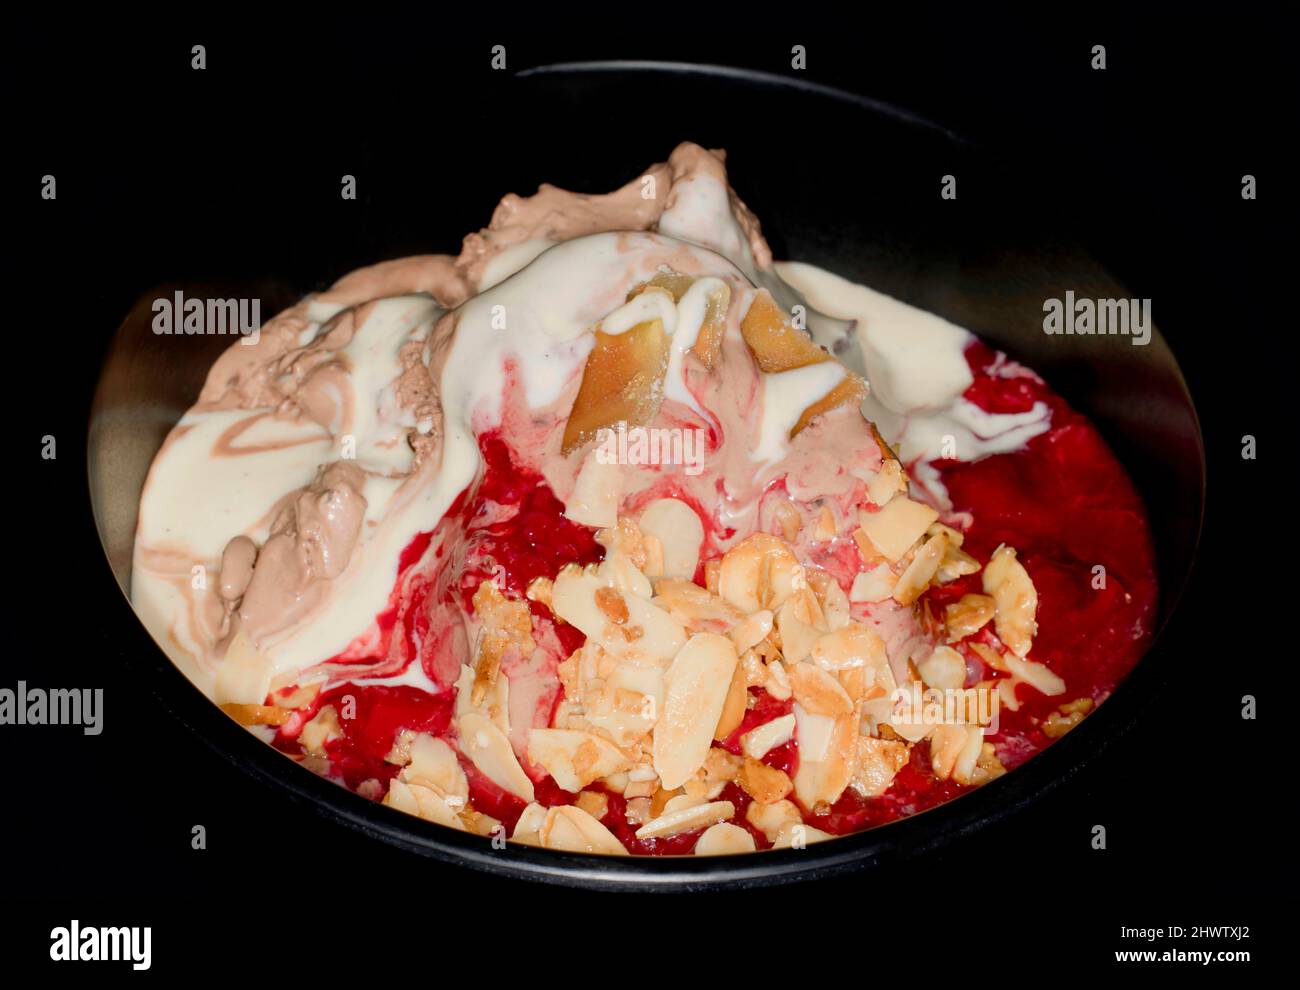 Ice cream with cherries and almonds Stock Photo